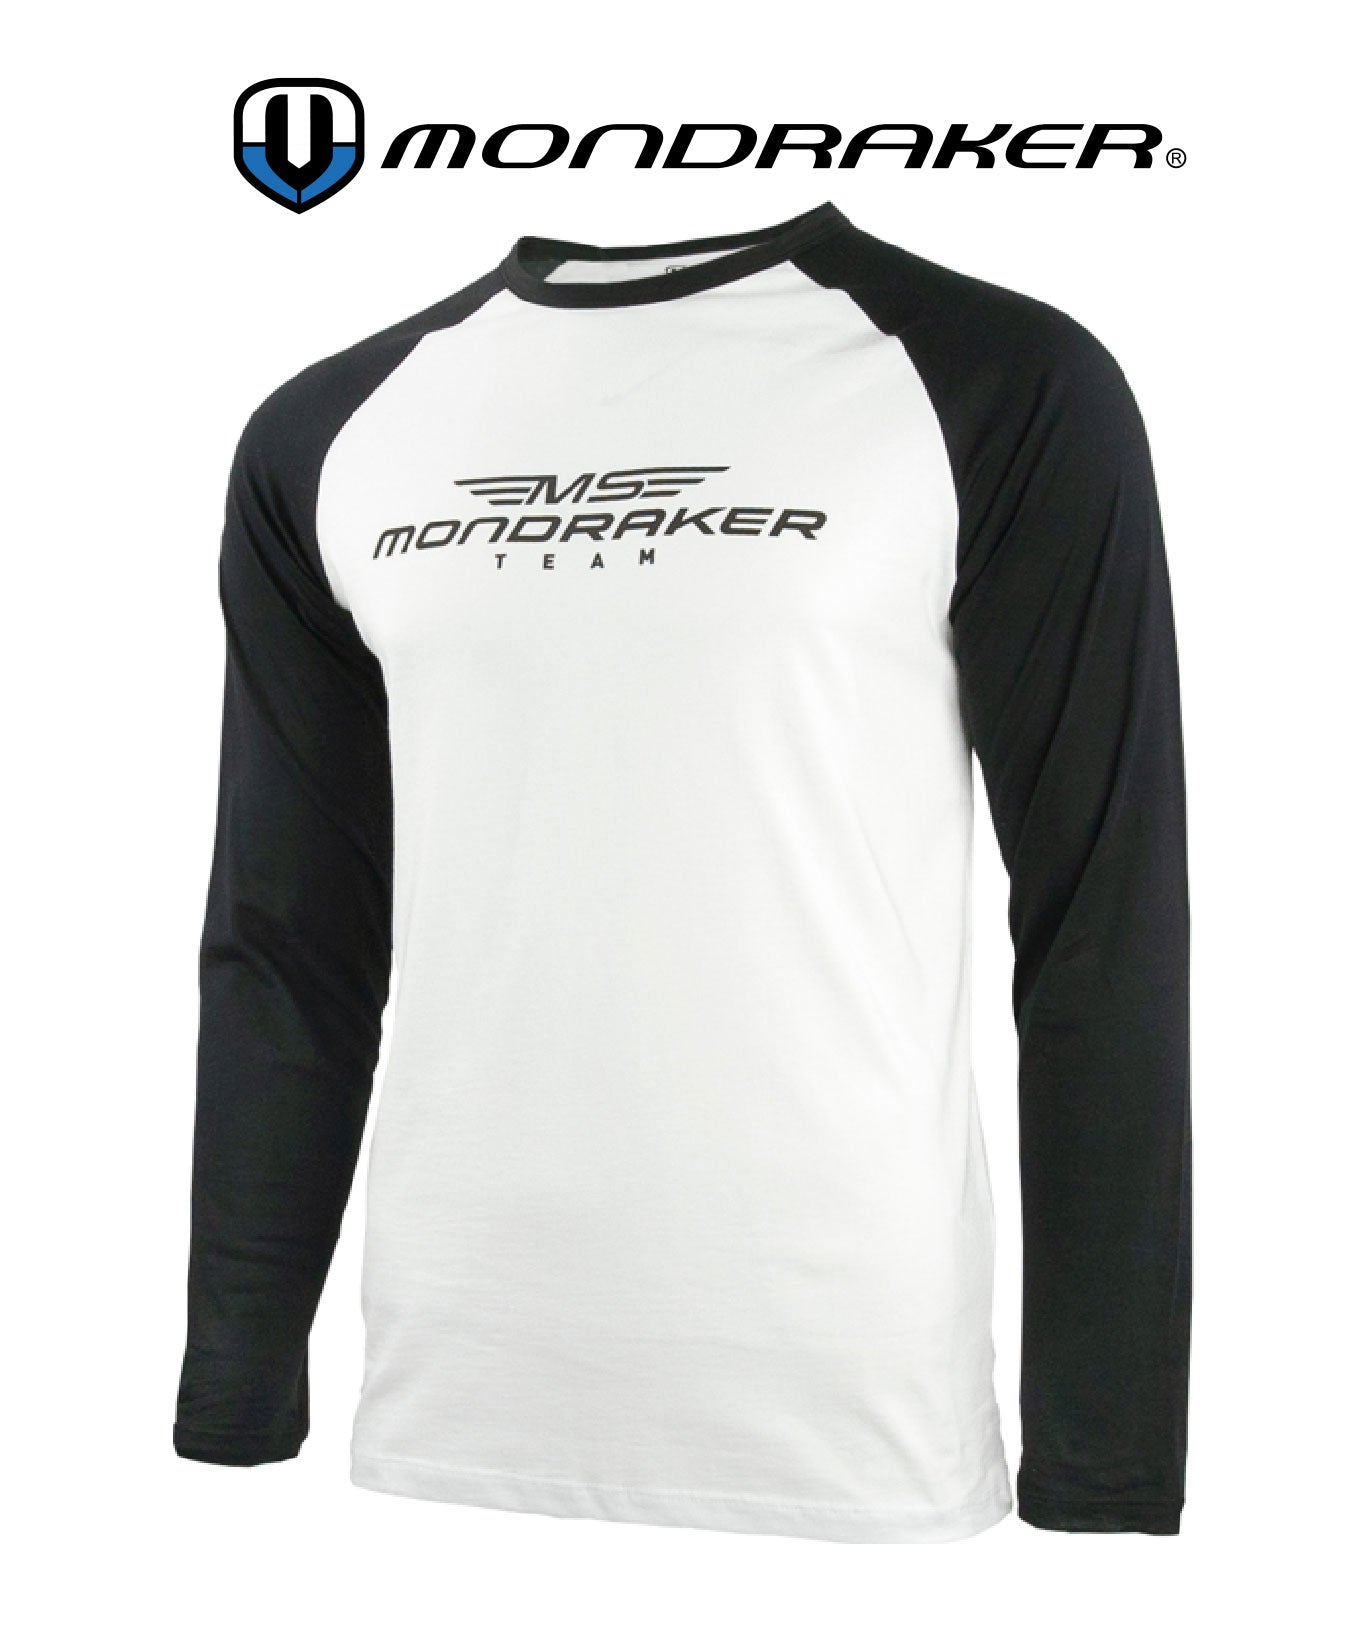 Mondraker T-Shirt Pit MS Racing Long Sleeve black white - Premium Bikeshop